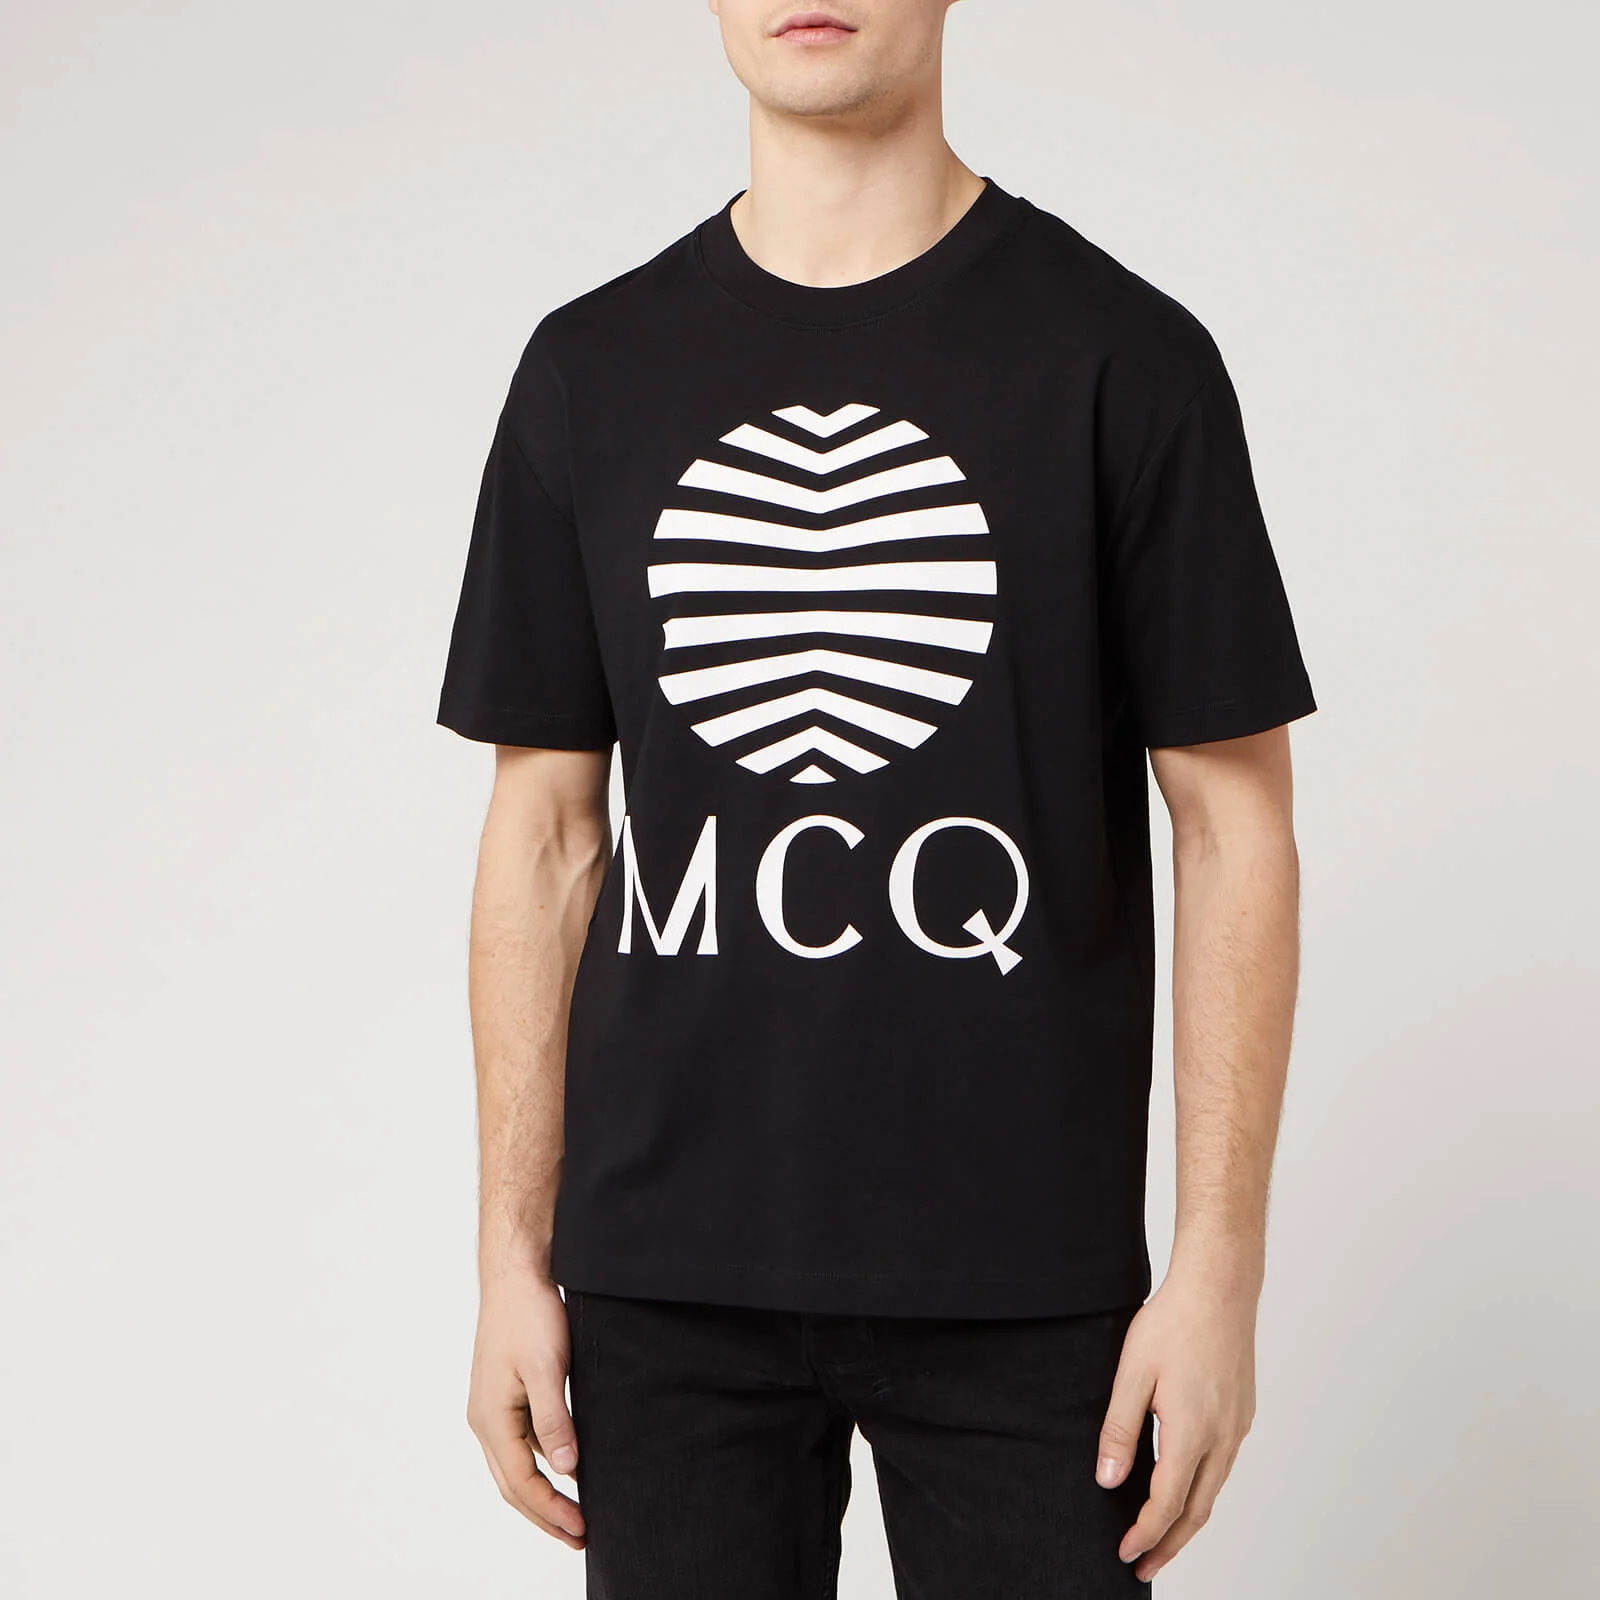 McQ Alexander McQueen Men's Dropped Shoulder Logo T-Shirt - Darkest Black Image 1